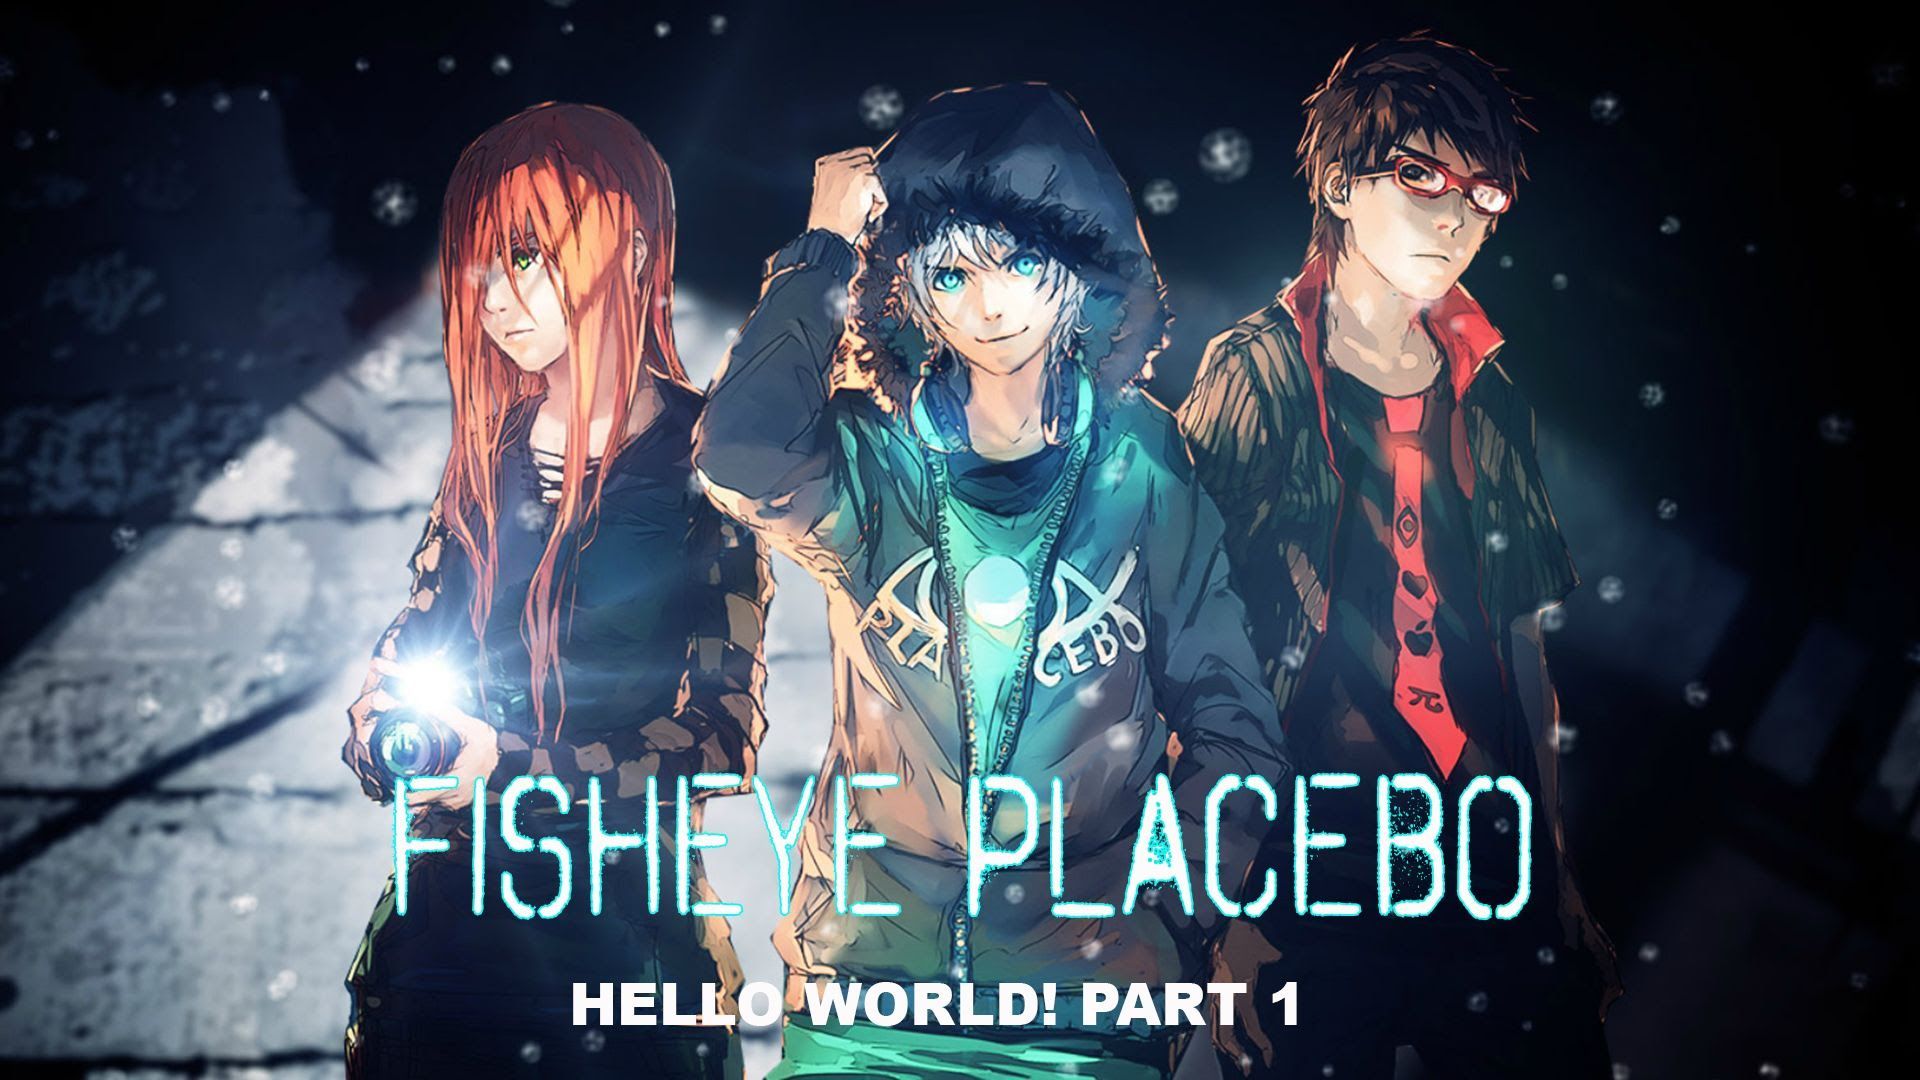 Fisheye Placebo Hello World! Part. 1 [ENGLISH]. Fisheye placebo